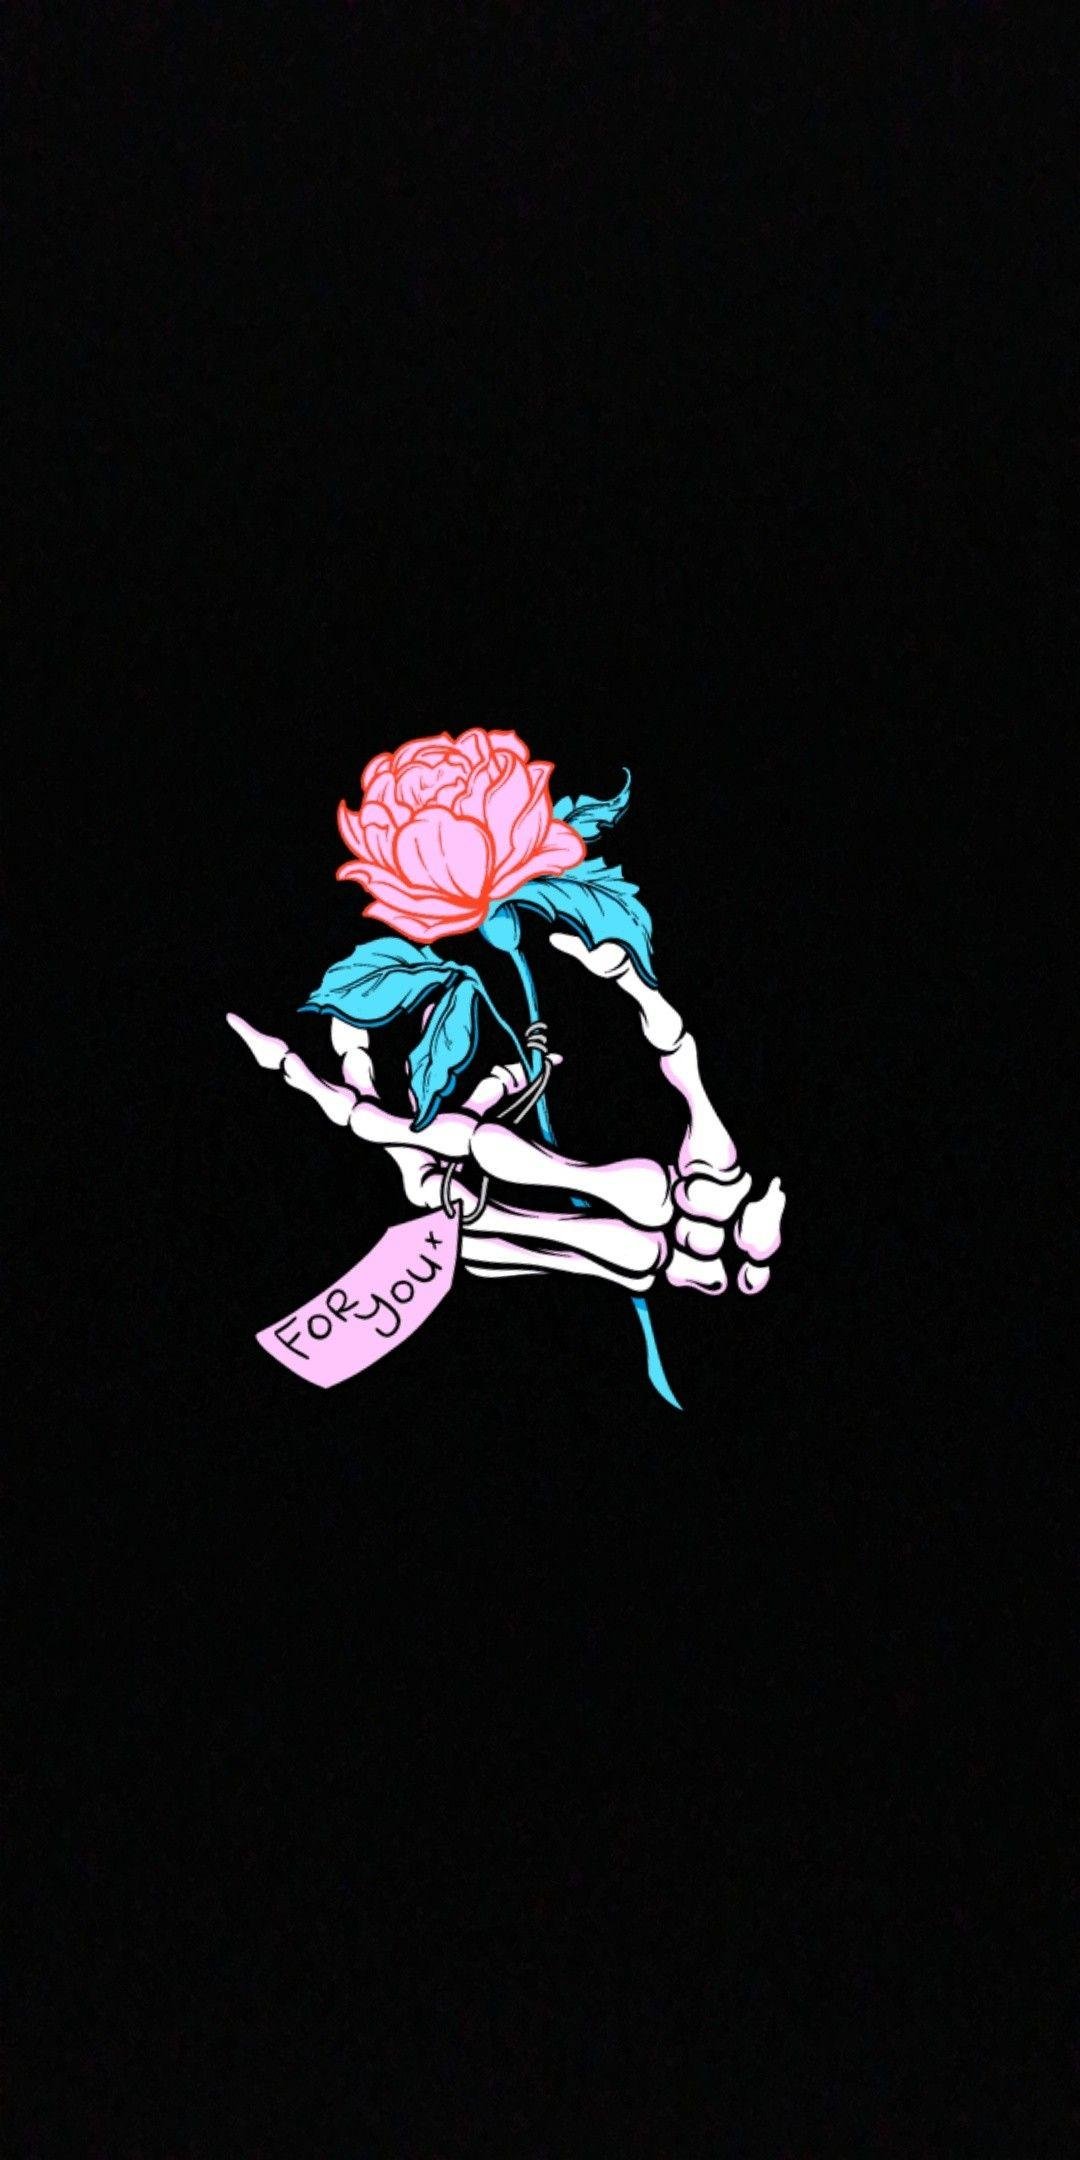 Download Skeleton Rose Vintage Grunge Aesthetic Wallpaper | Wallpapers.com